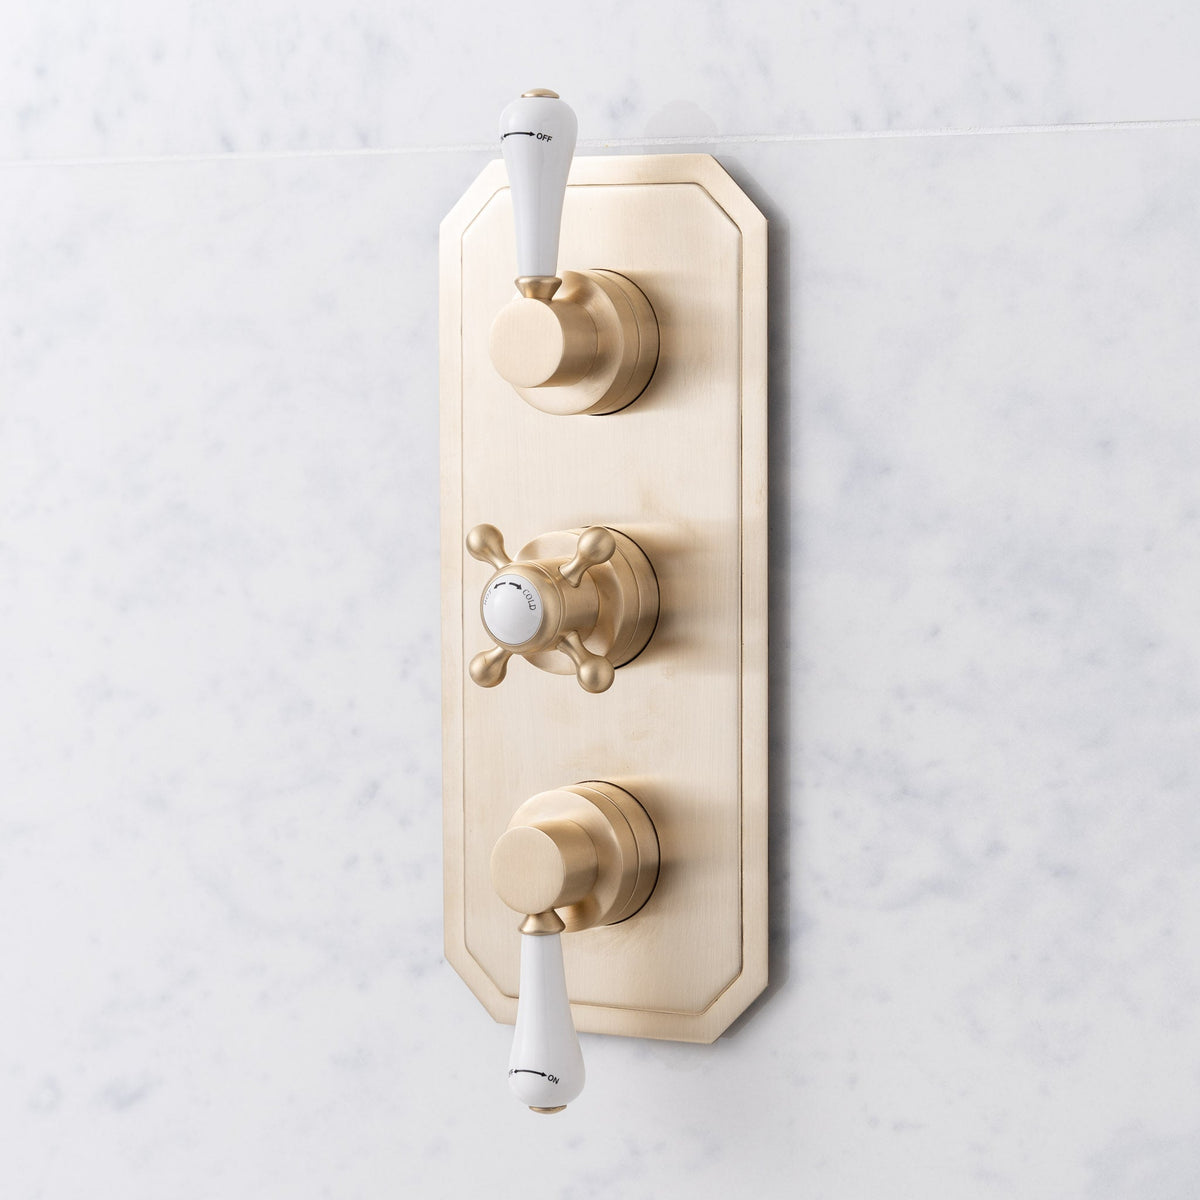 Thornton White Ceramic Lever &amp; Cleaver Telephone Handset Concealed Thermostatic Shower Set - Rutland London (USA)